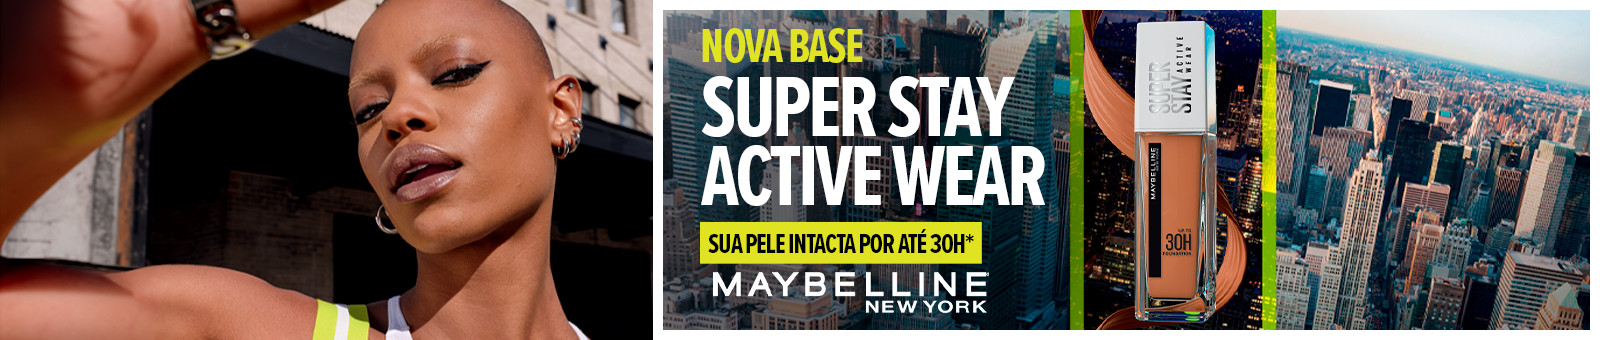 Nova base. Super Stay Active Wear. Sua pele intacta por até 30h. Maybelline New York.